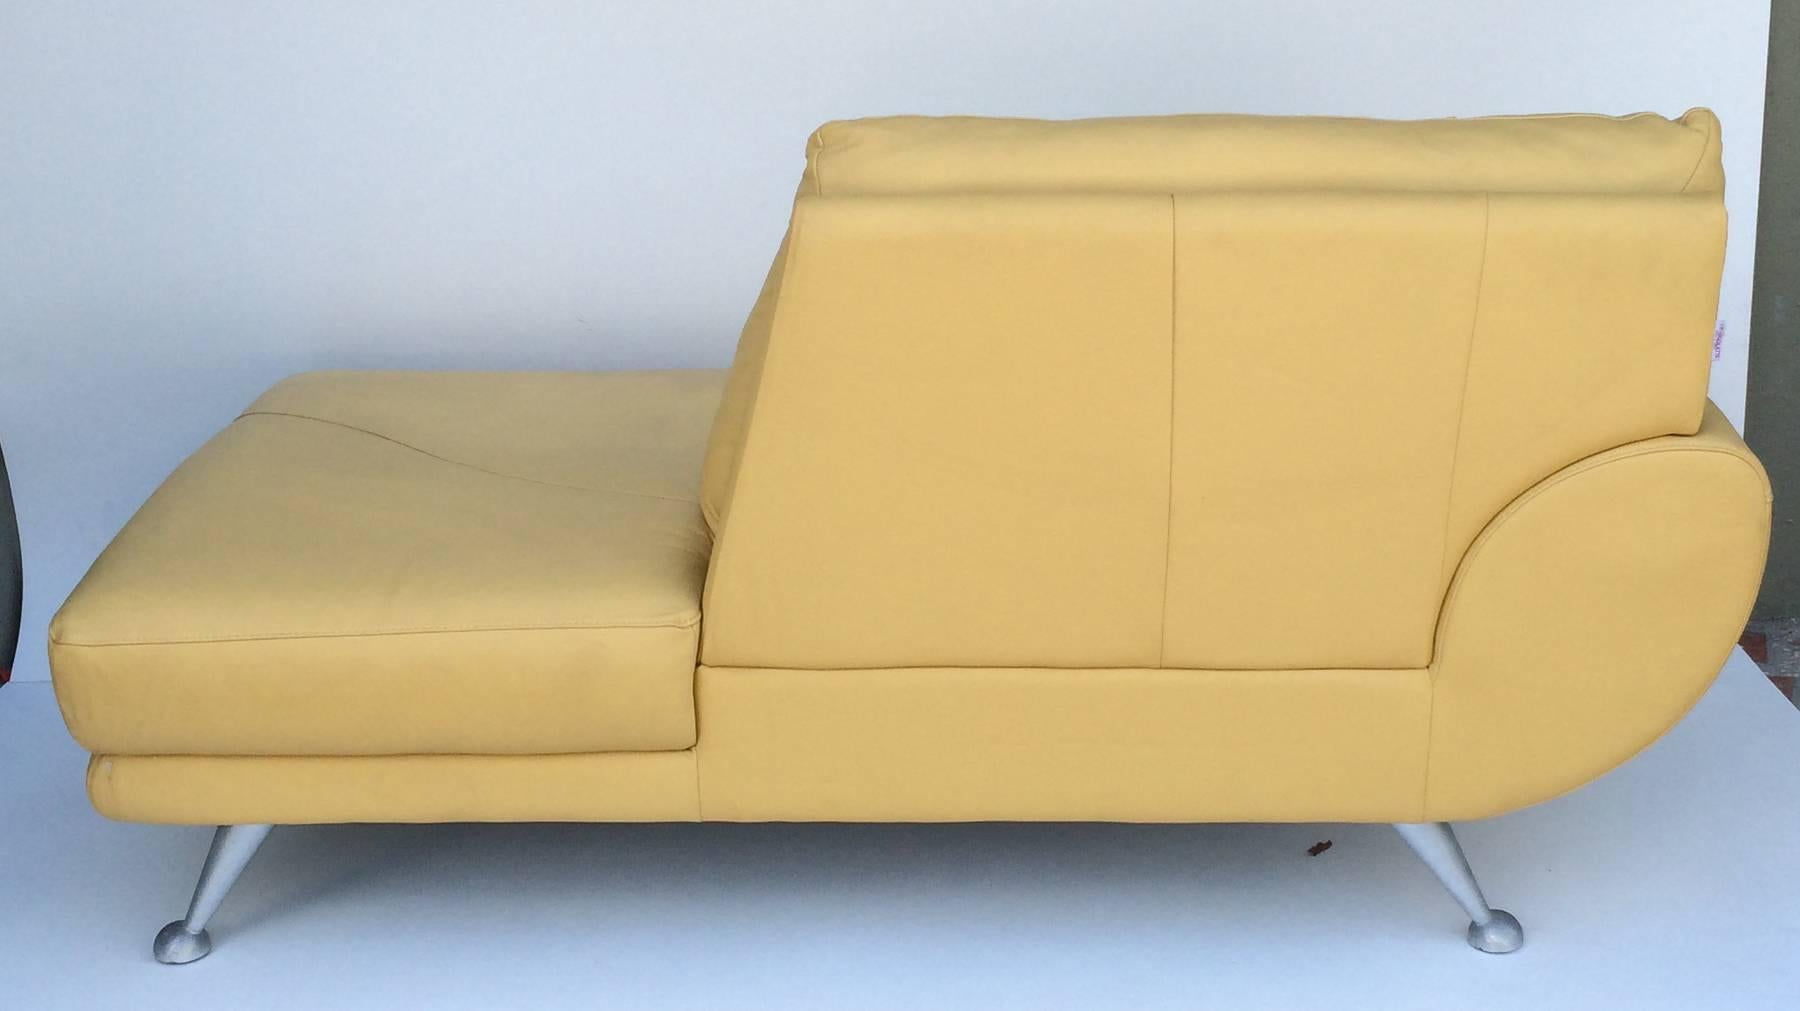 Postmodern yellow leather chaise longue by Italian company Nicoletti Salotti.